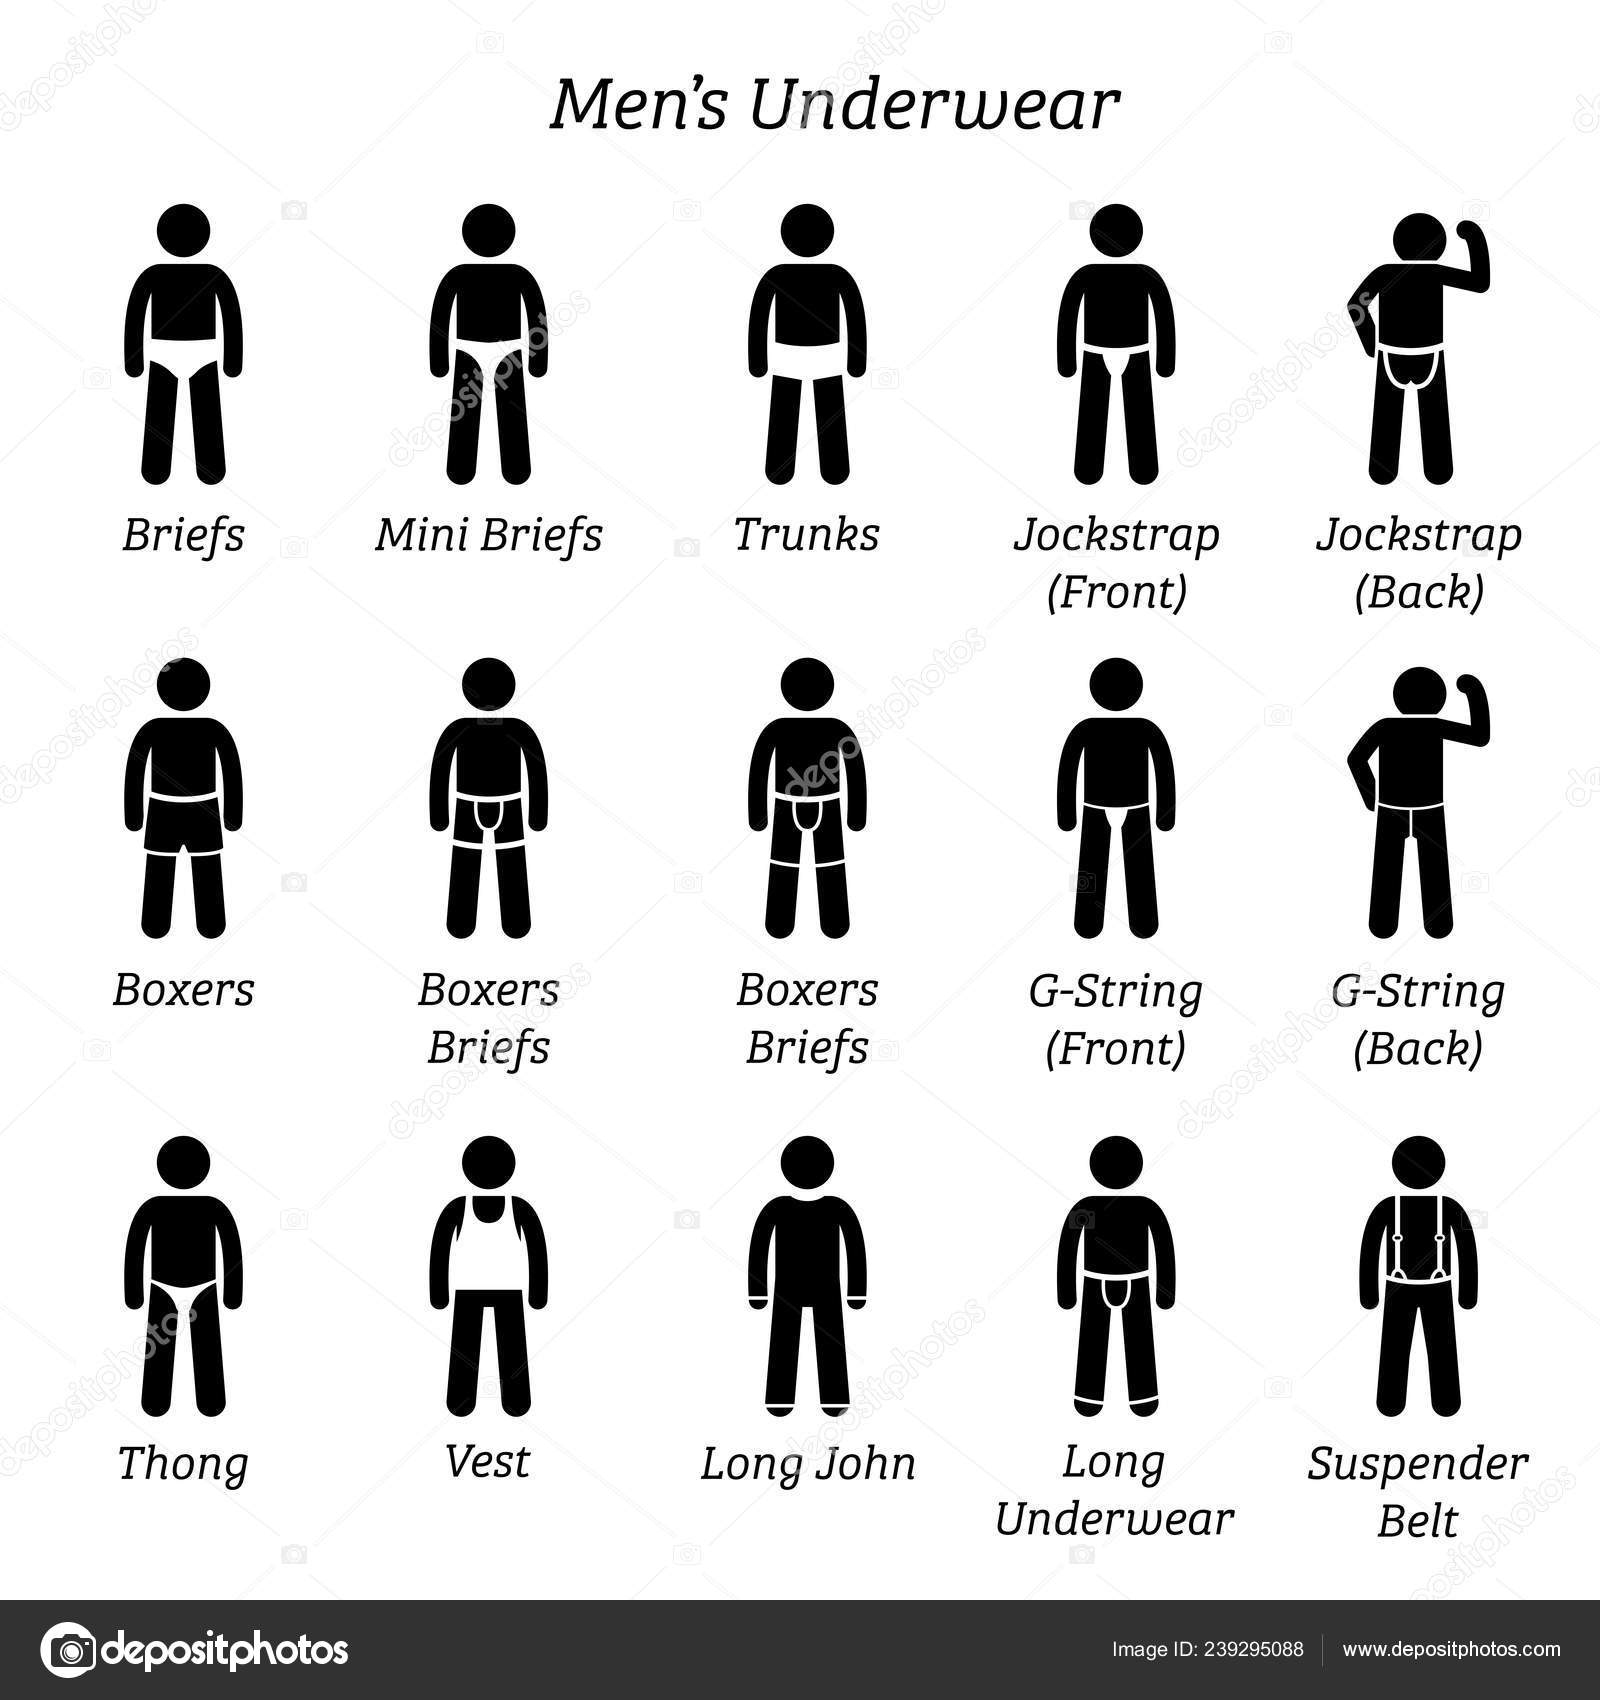 https://st4.depositphotos.com/1029662/23929/v/1600/depositphotos_239295088-stock-illustration-men-underwear-undergarment-stick-figures.jpg